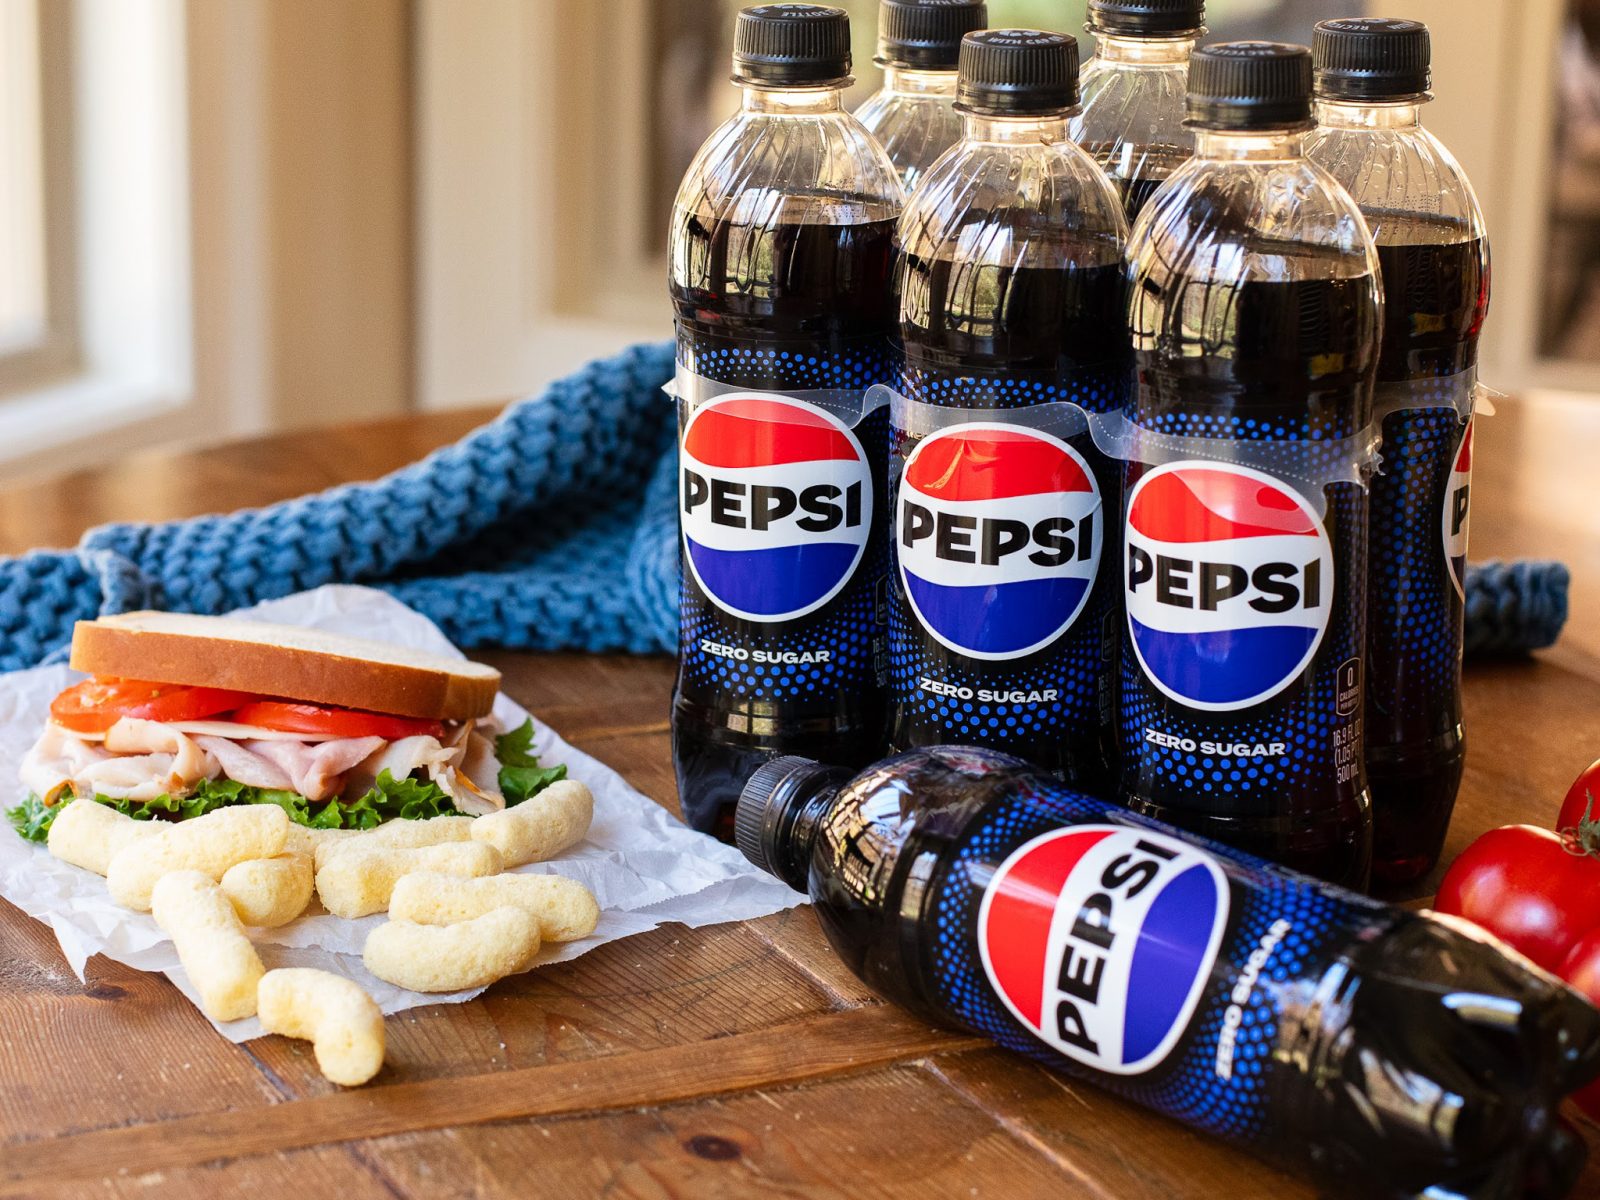 Pepsi Zero Sugar 6-Pack As Low As $3 At Publix (Regular Price $7.99)